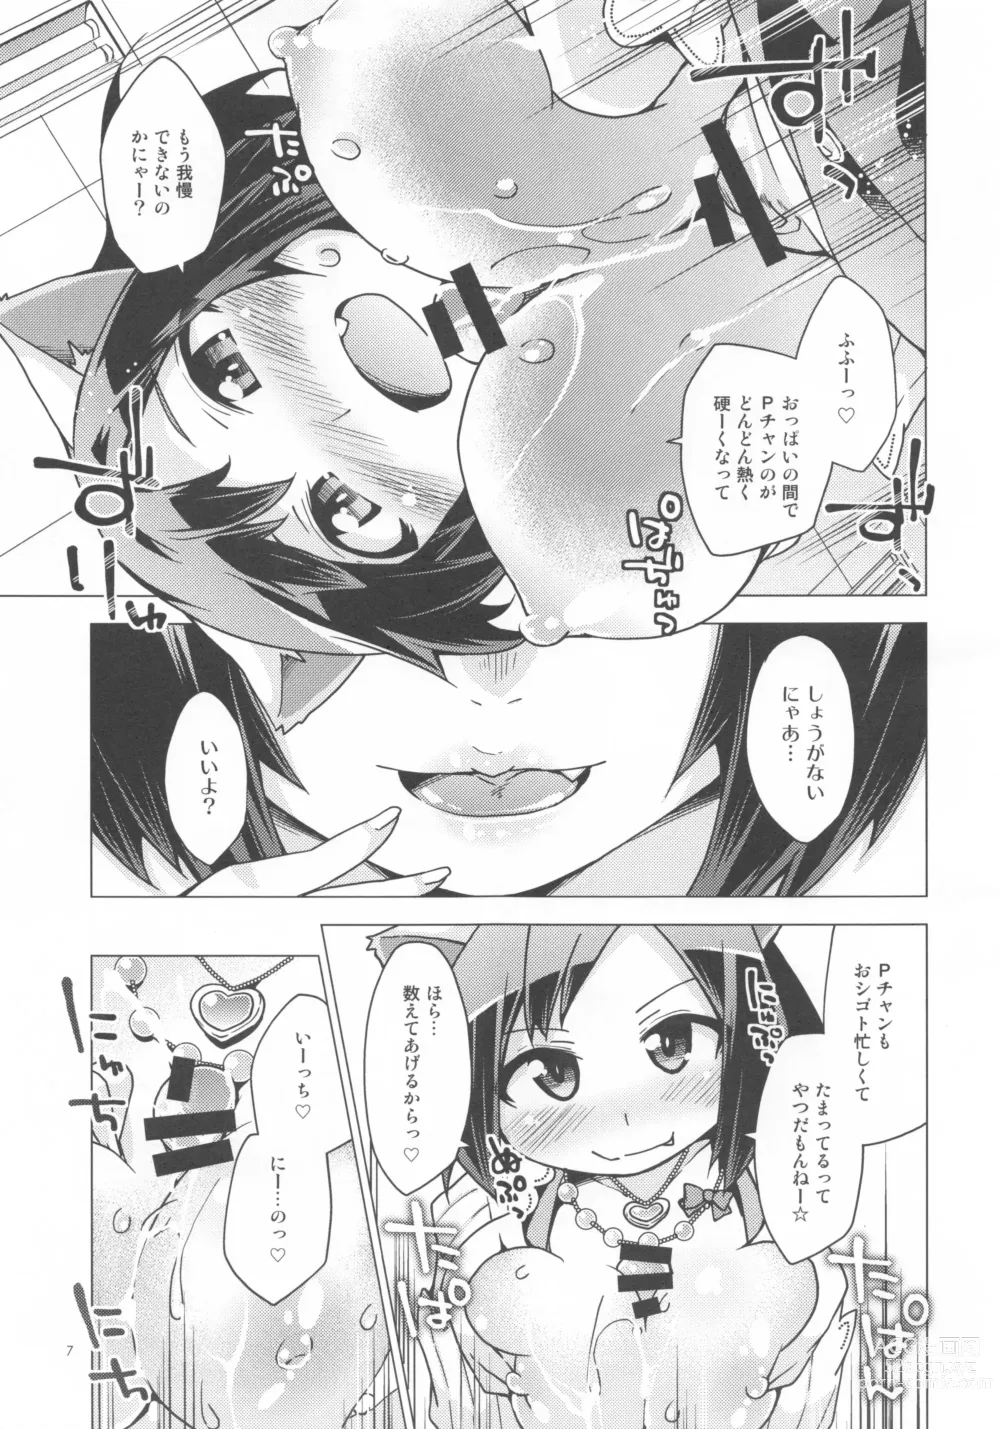 Page 6 of doujinshi Atashi Paizuri Android